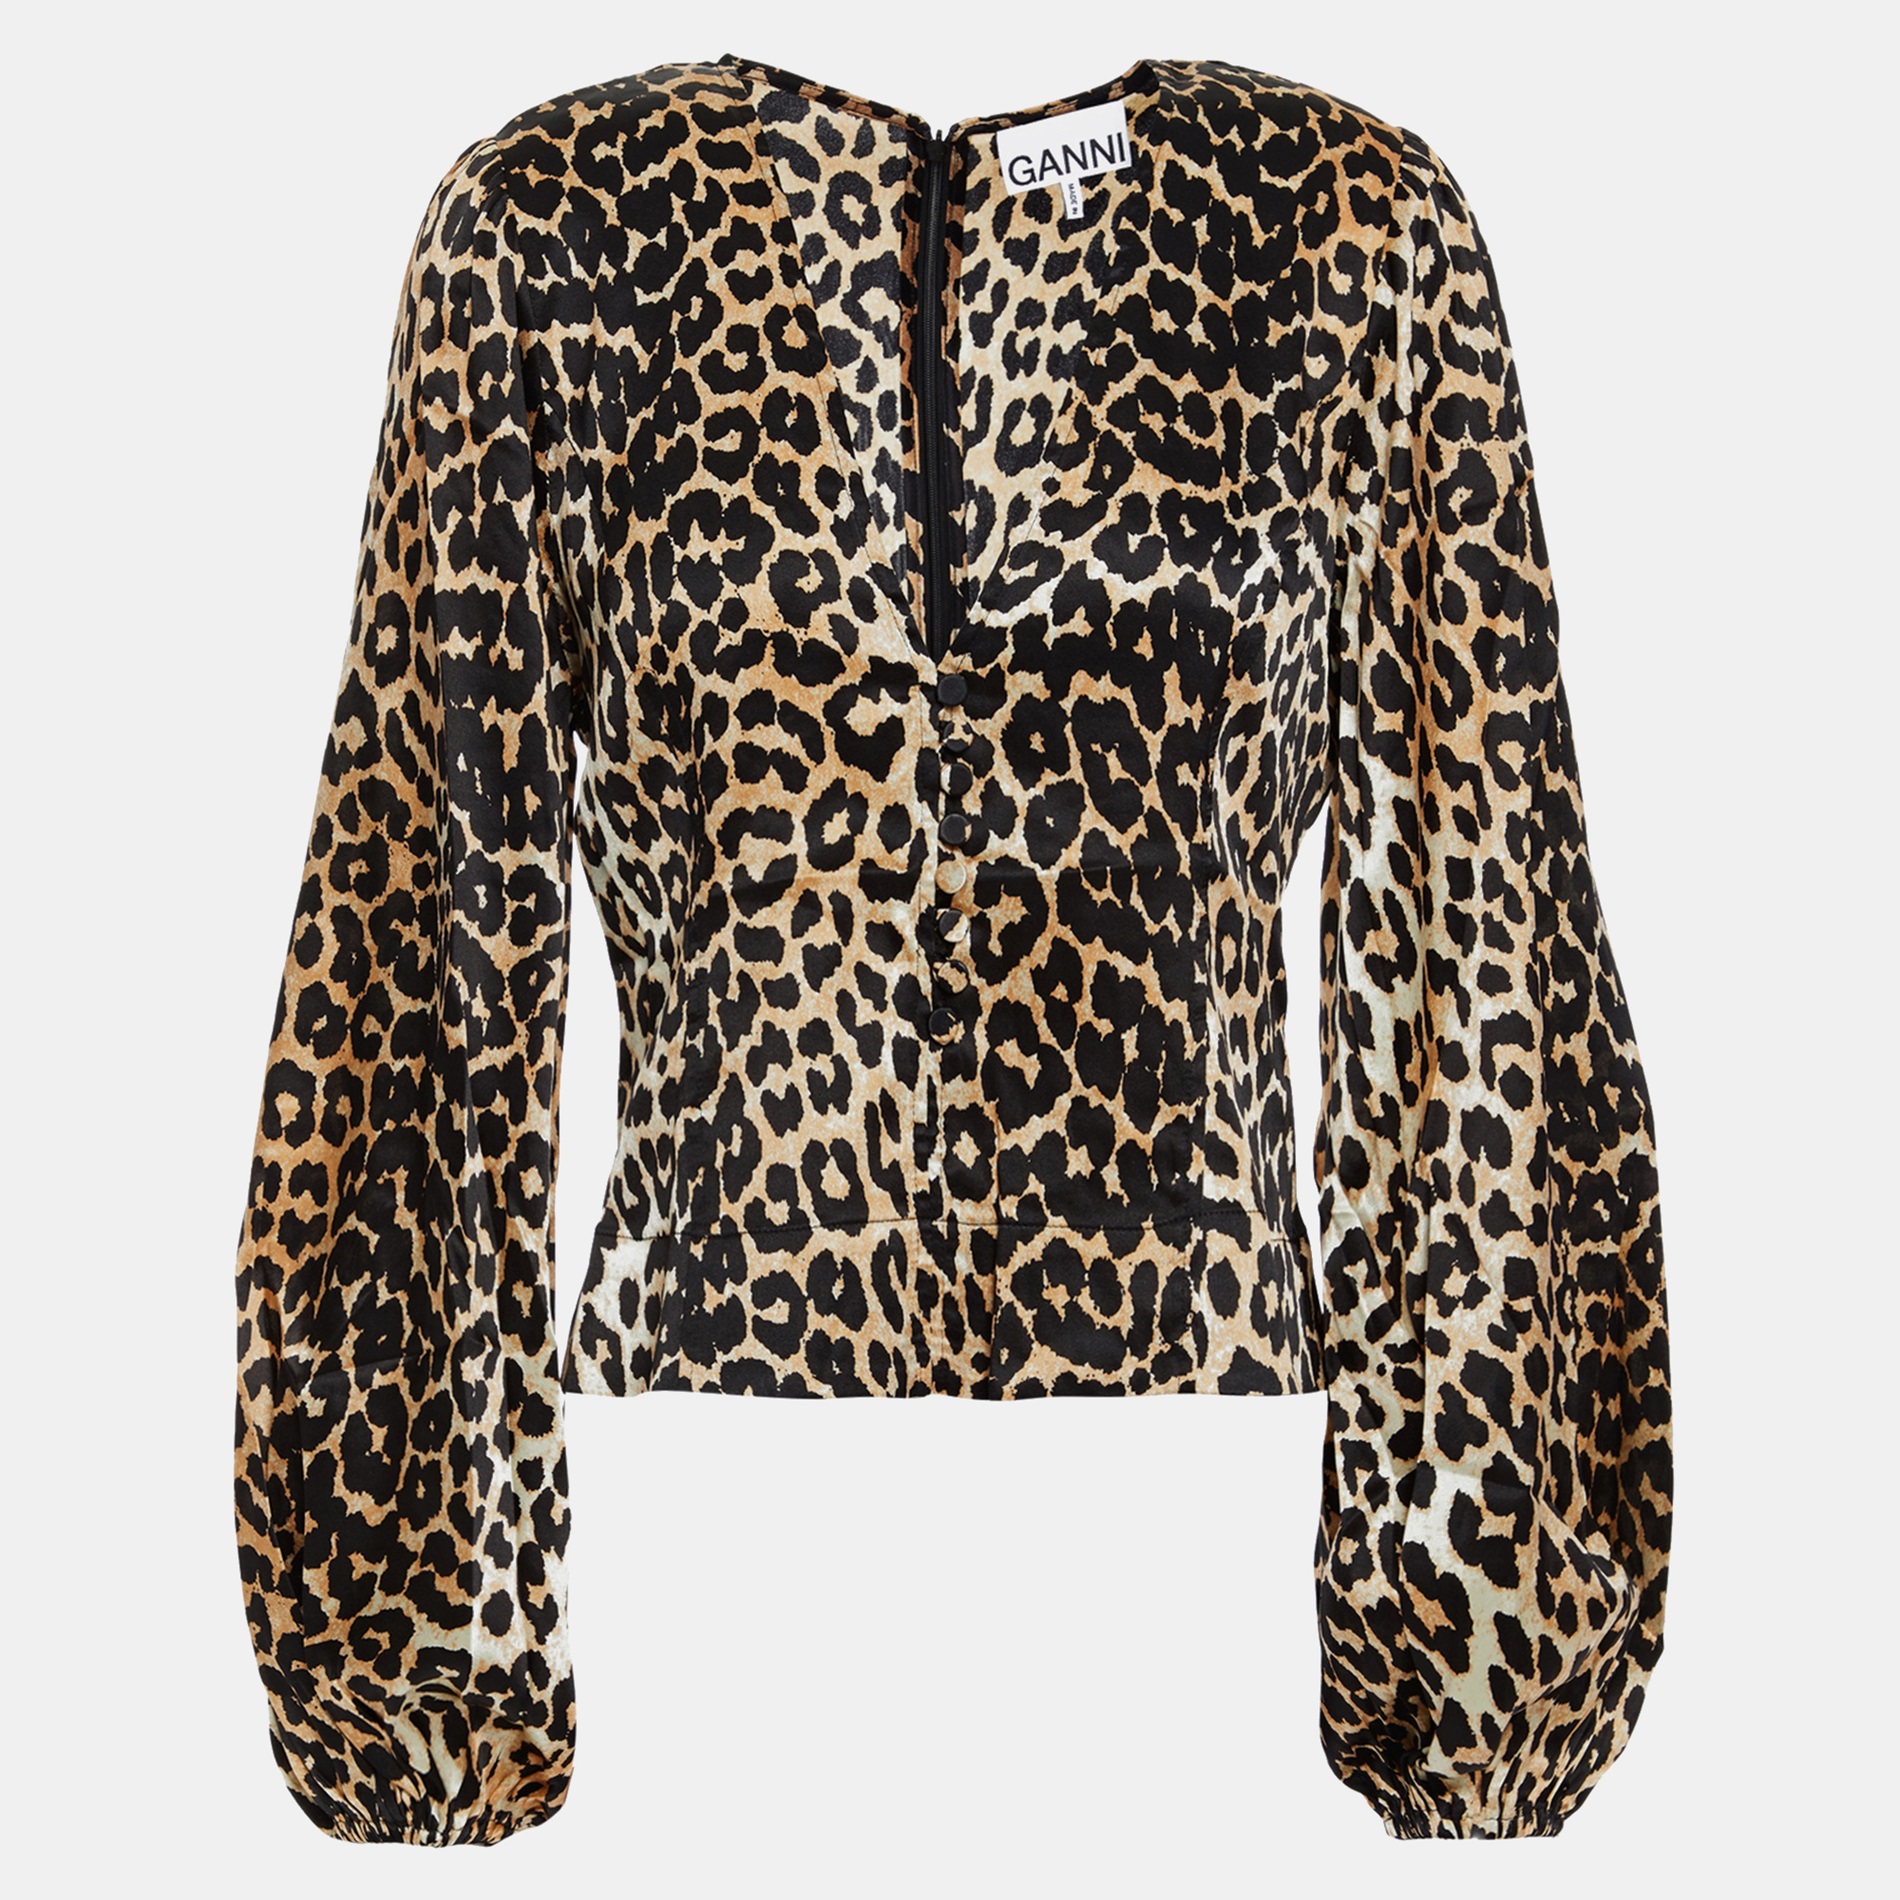 Ganni beige leopard print silk long sleeve top s (eu 36)